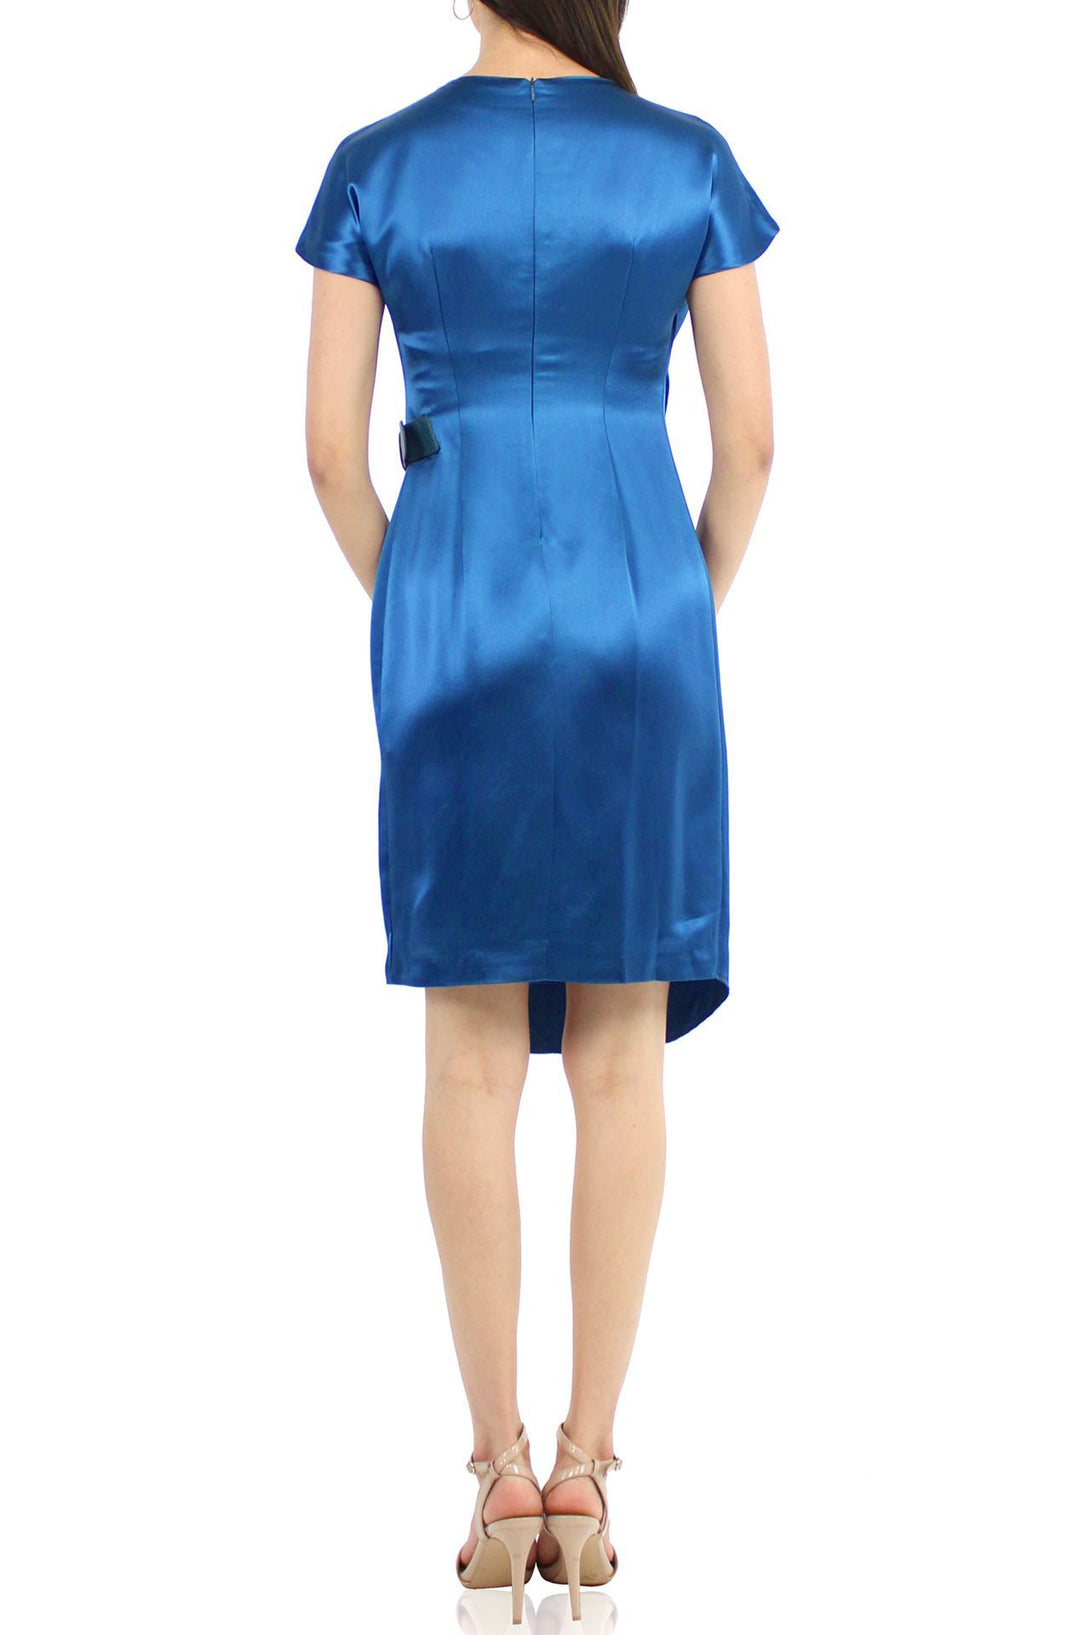 Designer-Mini-Dress-In-Blue-By-Kyle-Richard